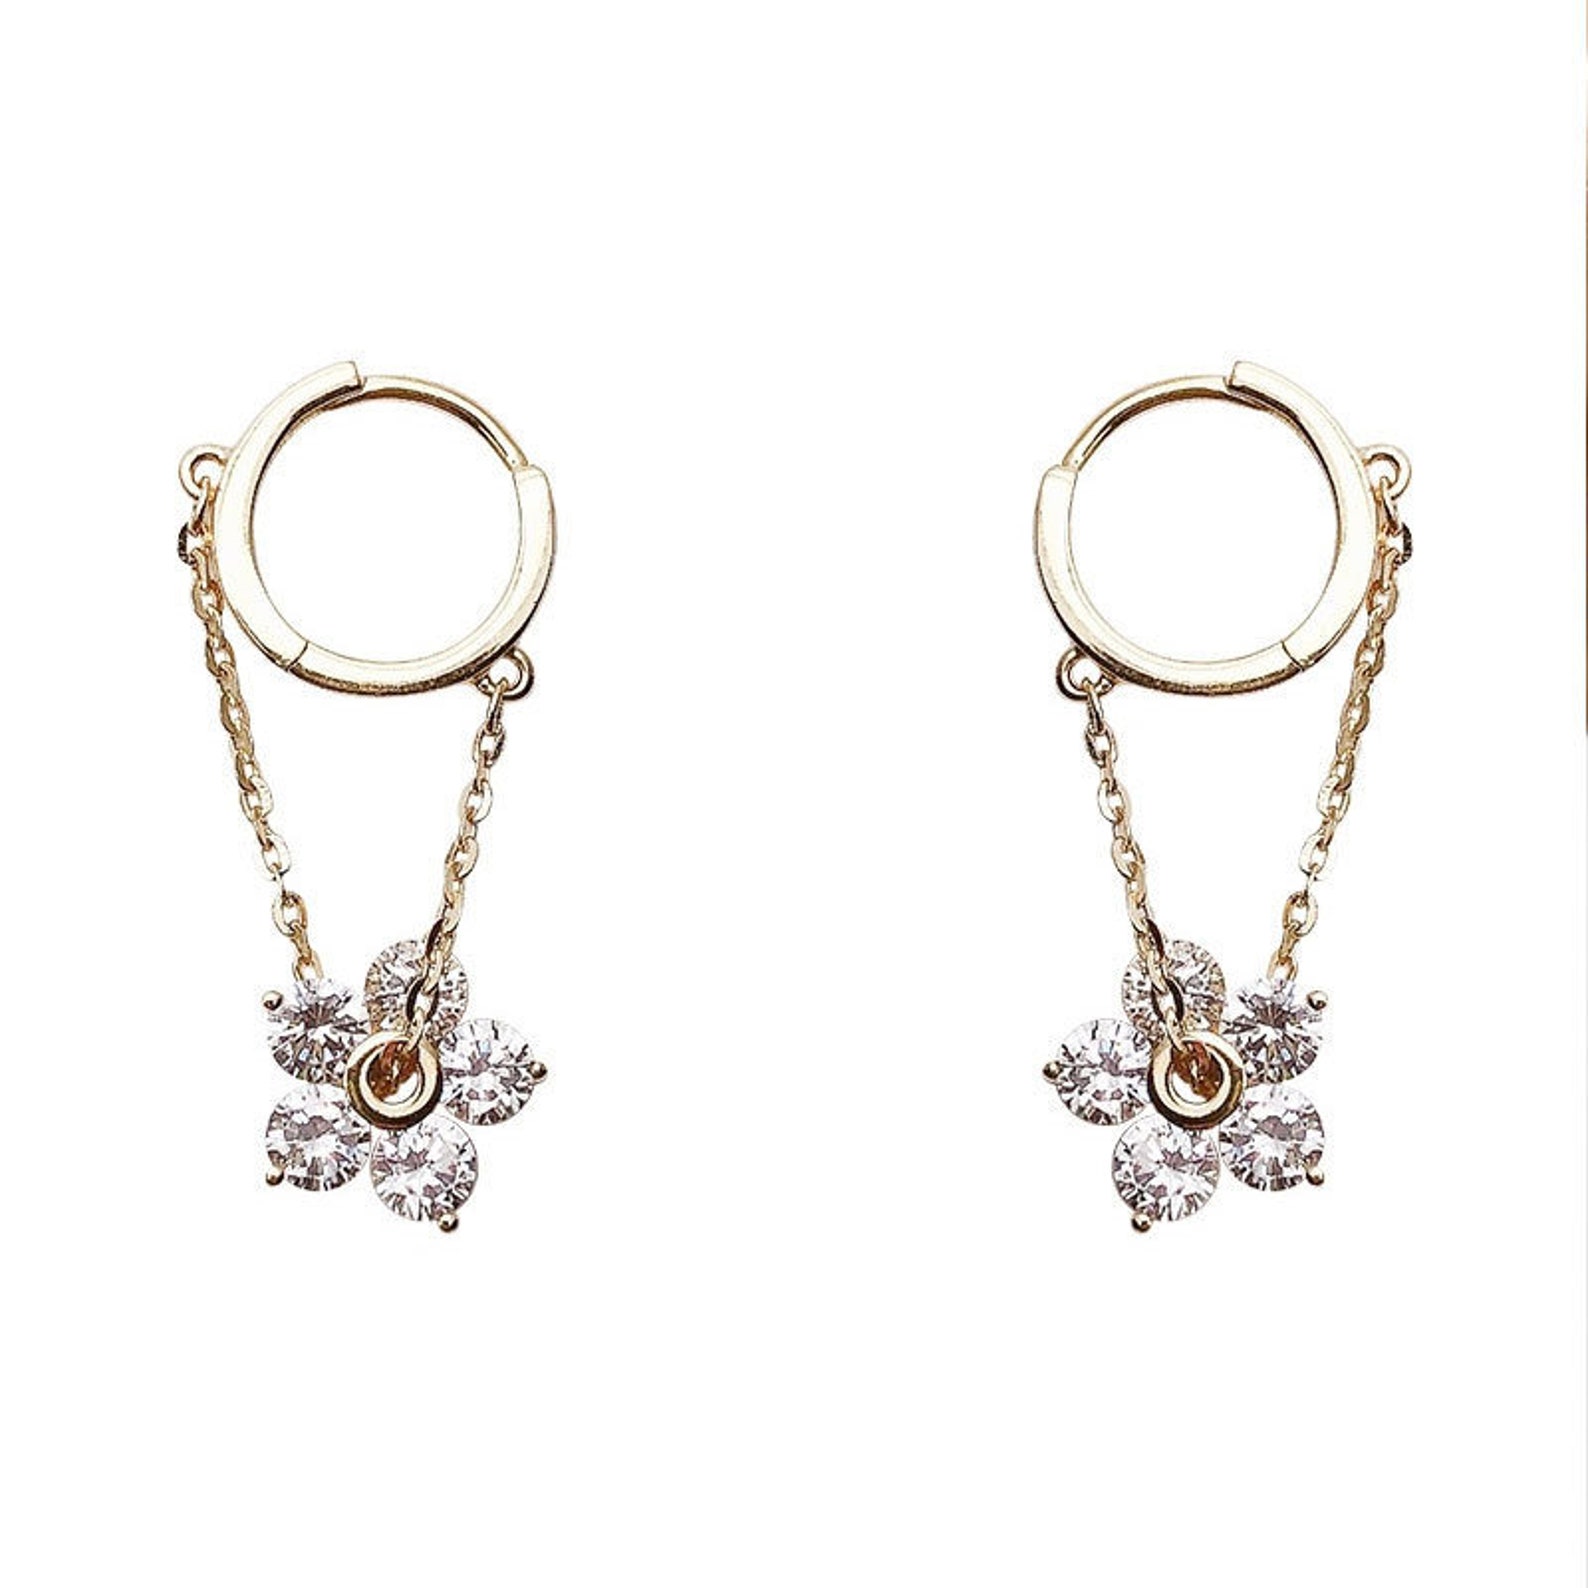 Flower Dangle Drop Earrings Chain Flower Earrings Gift for Her - Etsy